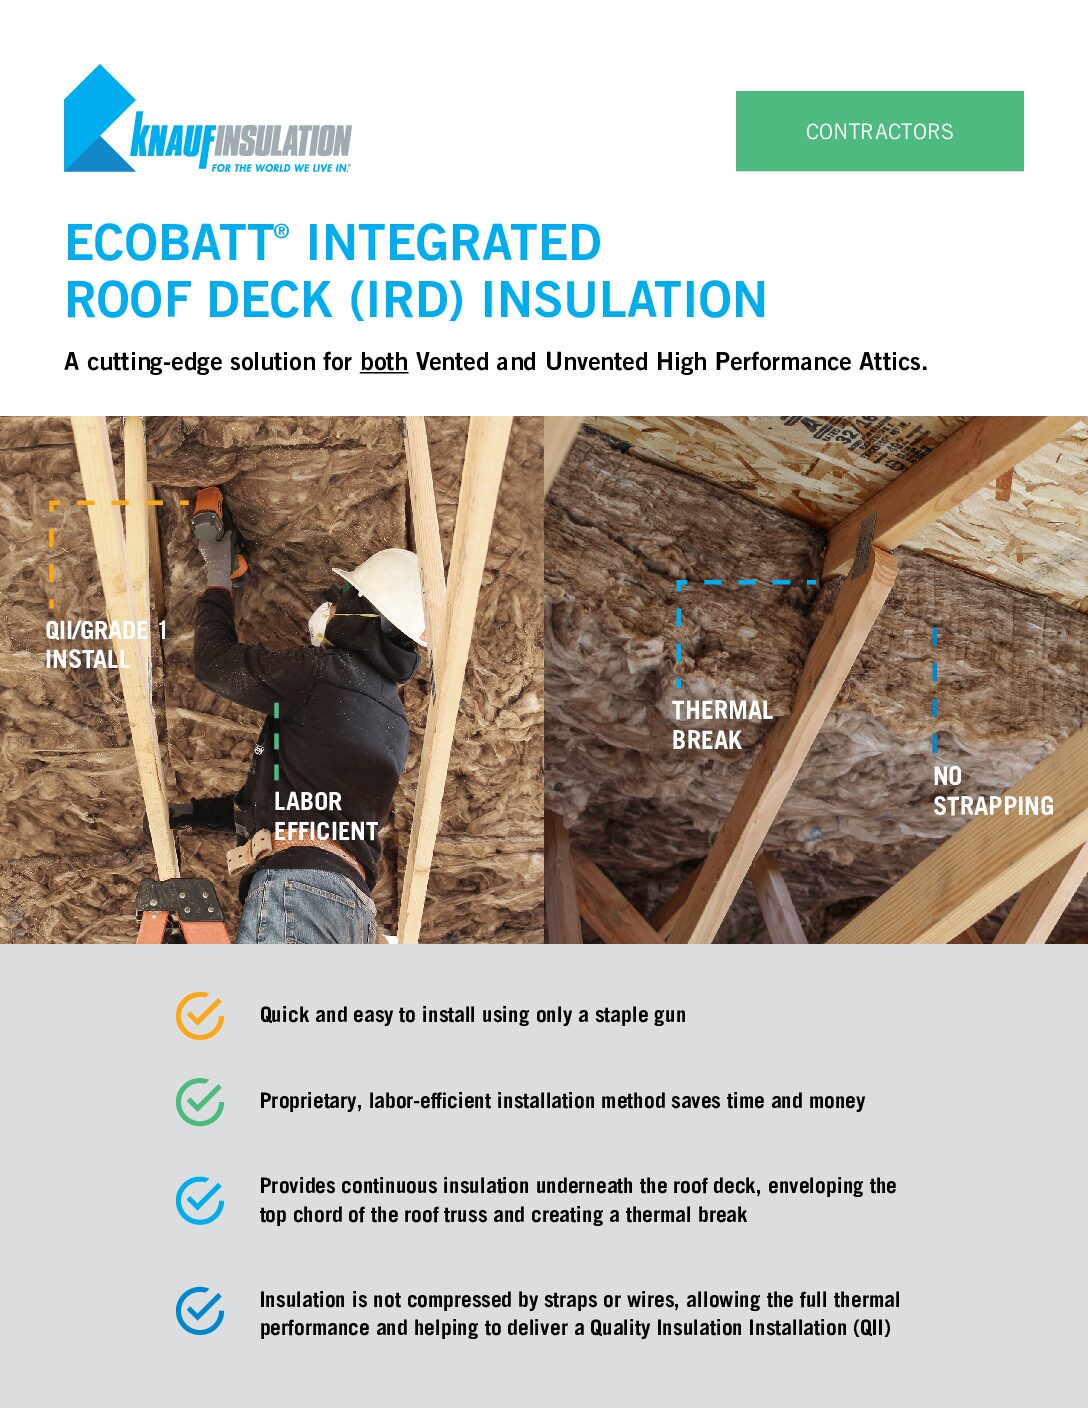 Knauf EcoBatt® Integrated Roof Deck Insulation Brochure - Document Screen Grab